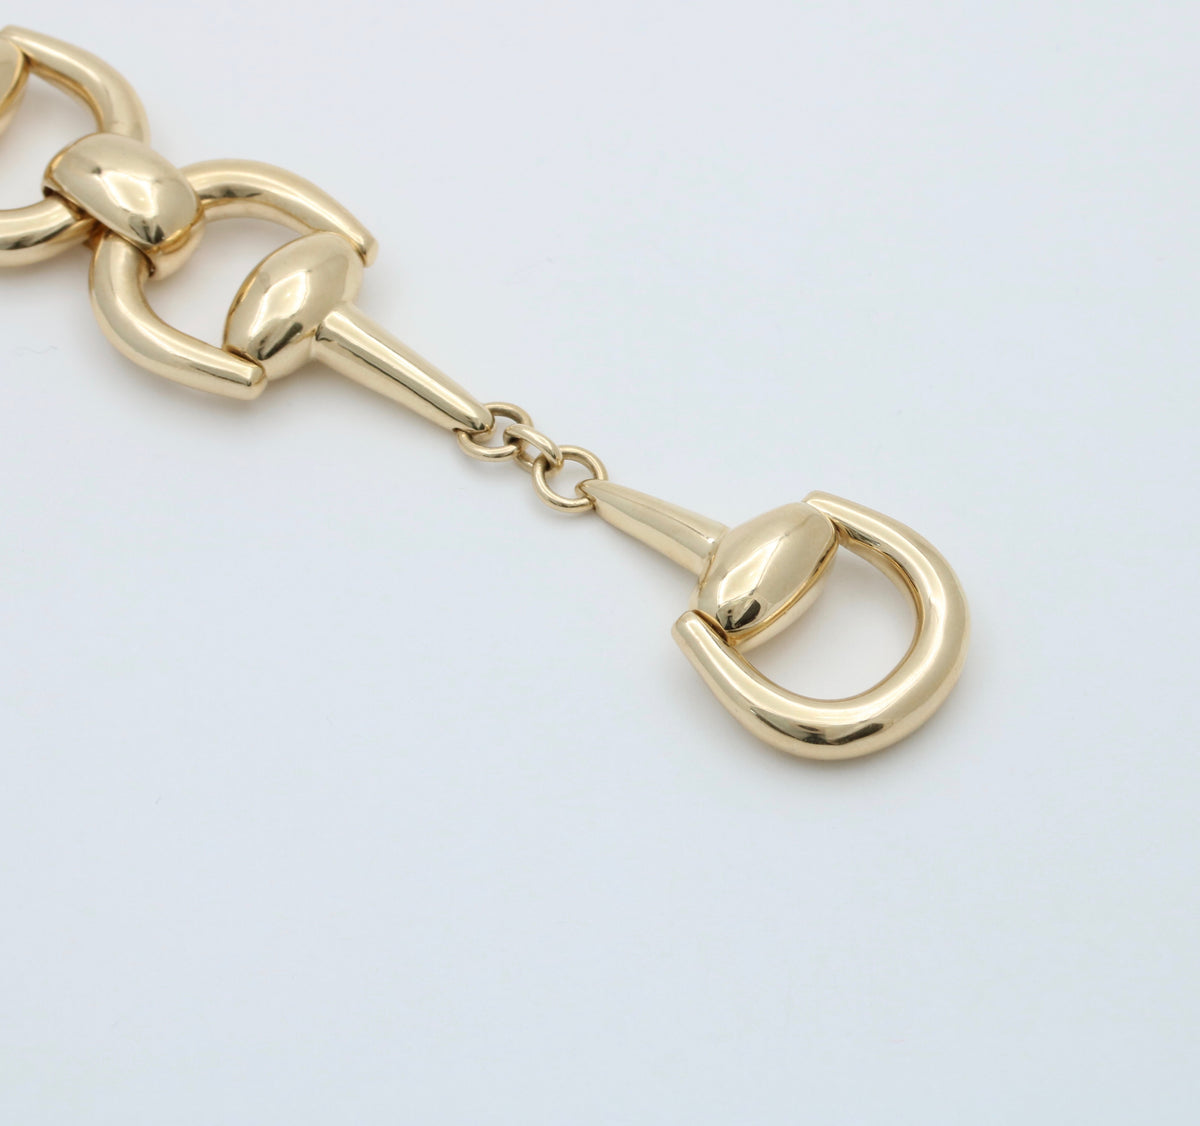 Vintage 14K Gold Horsebit Bracelet, 7” Long